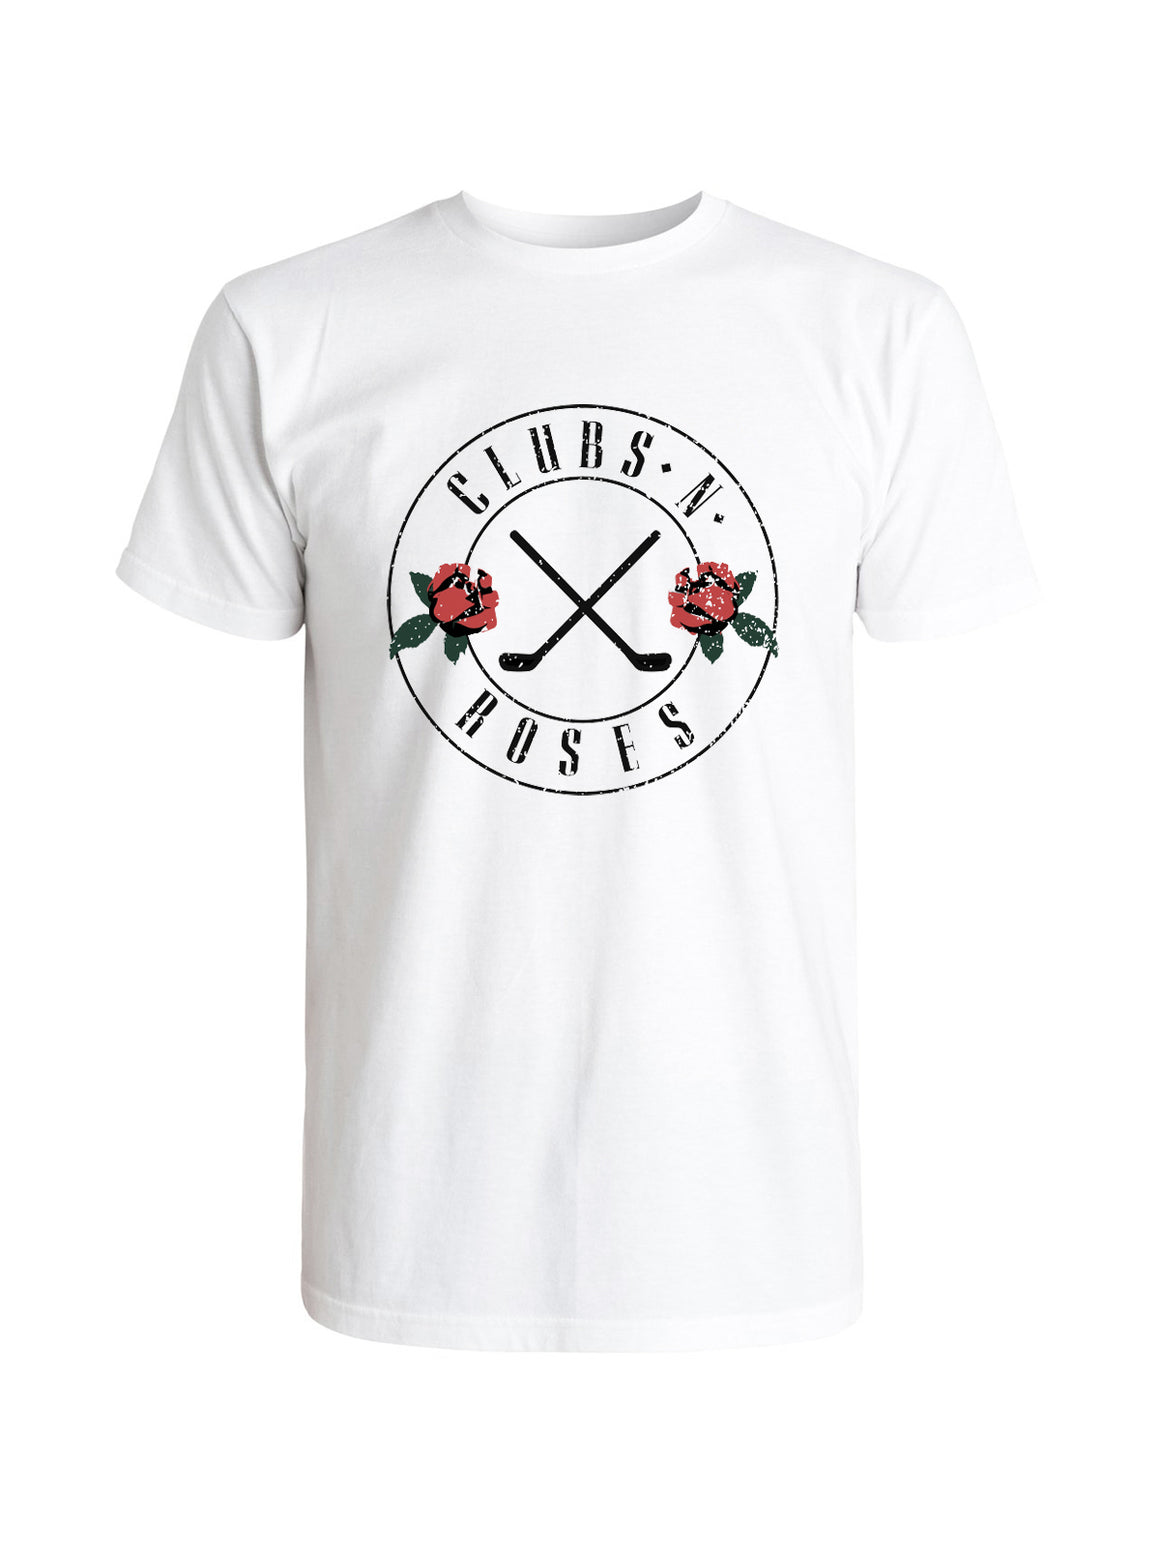 Clubs N' Roses Distressed Tee Shirt - White